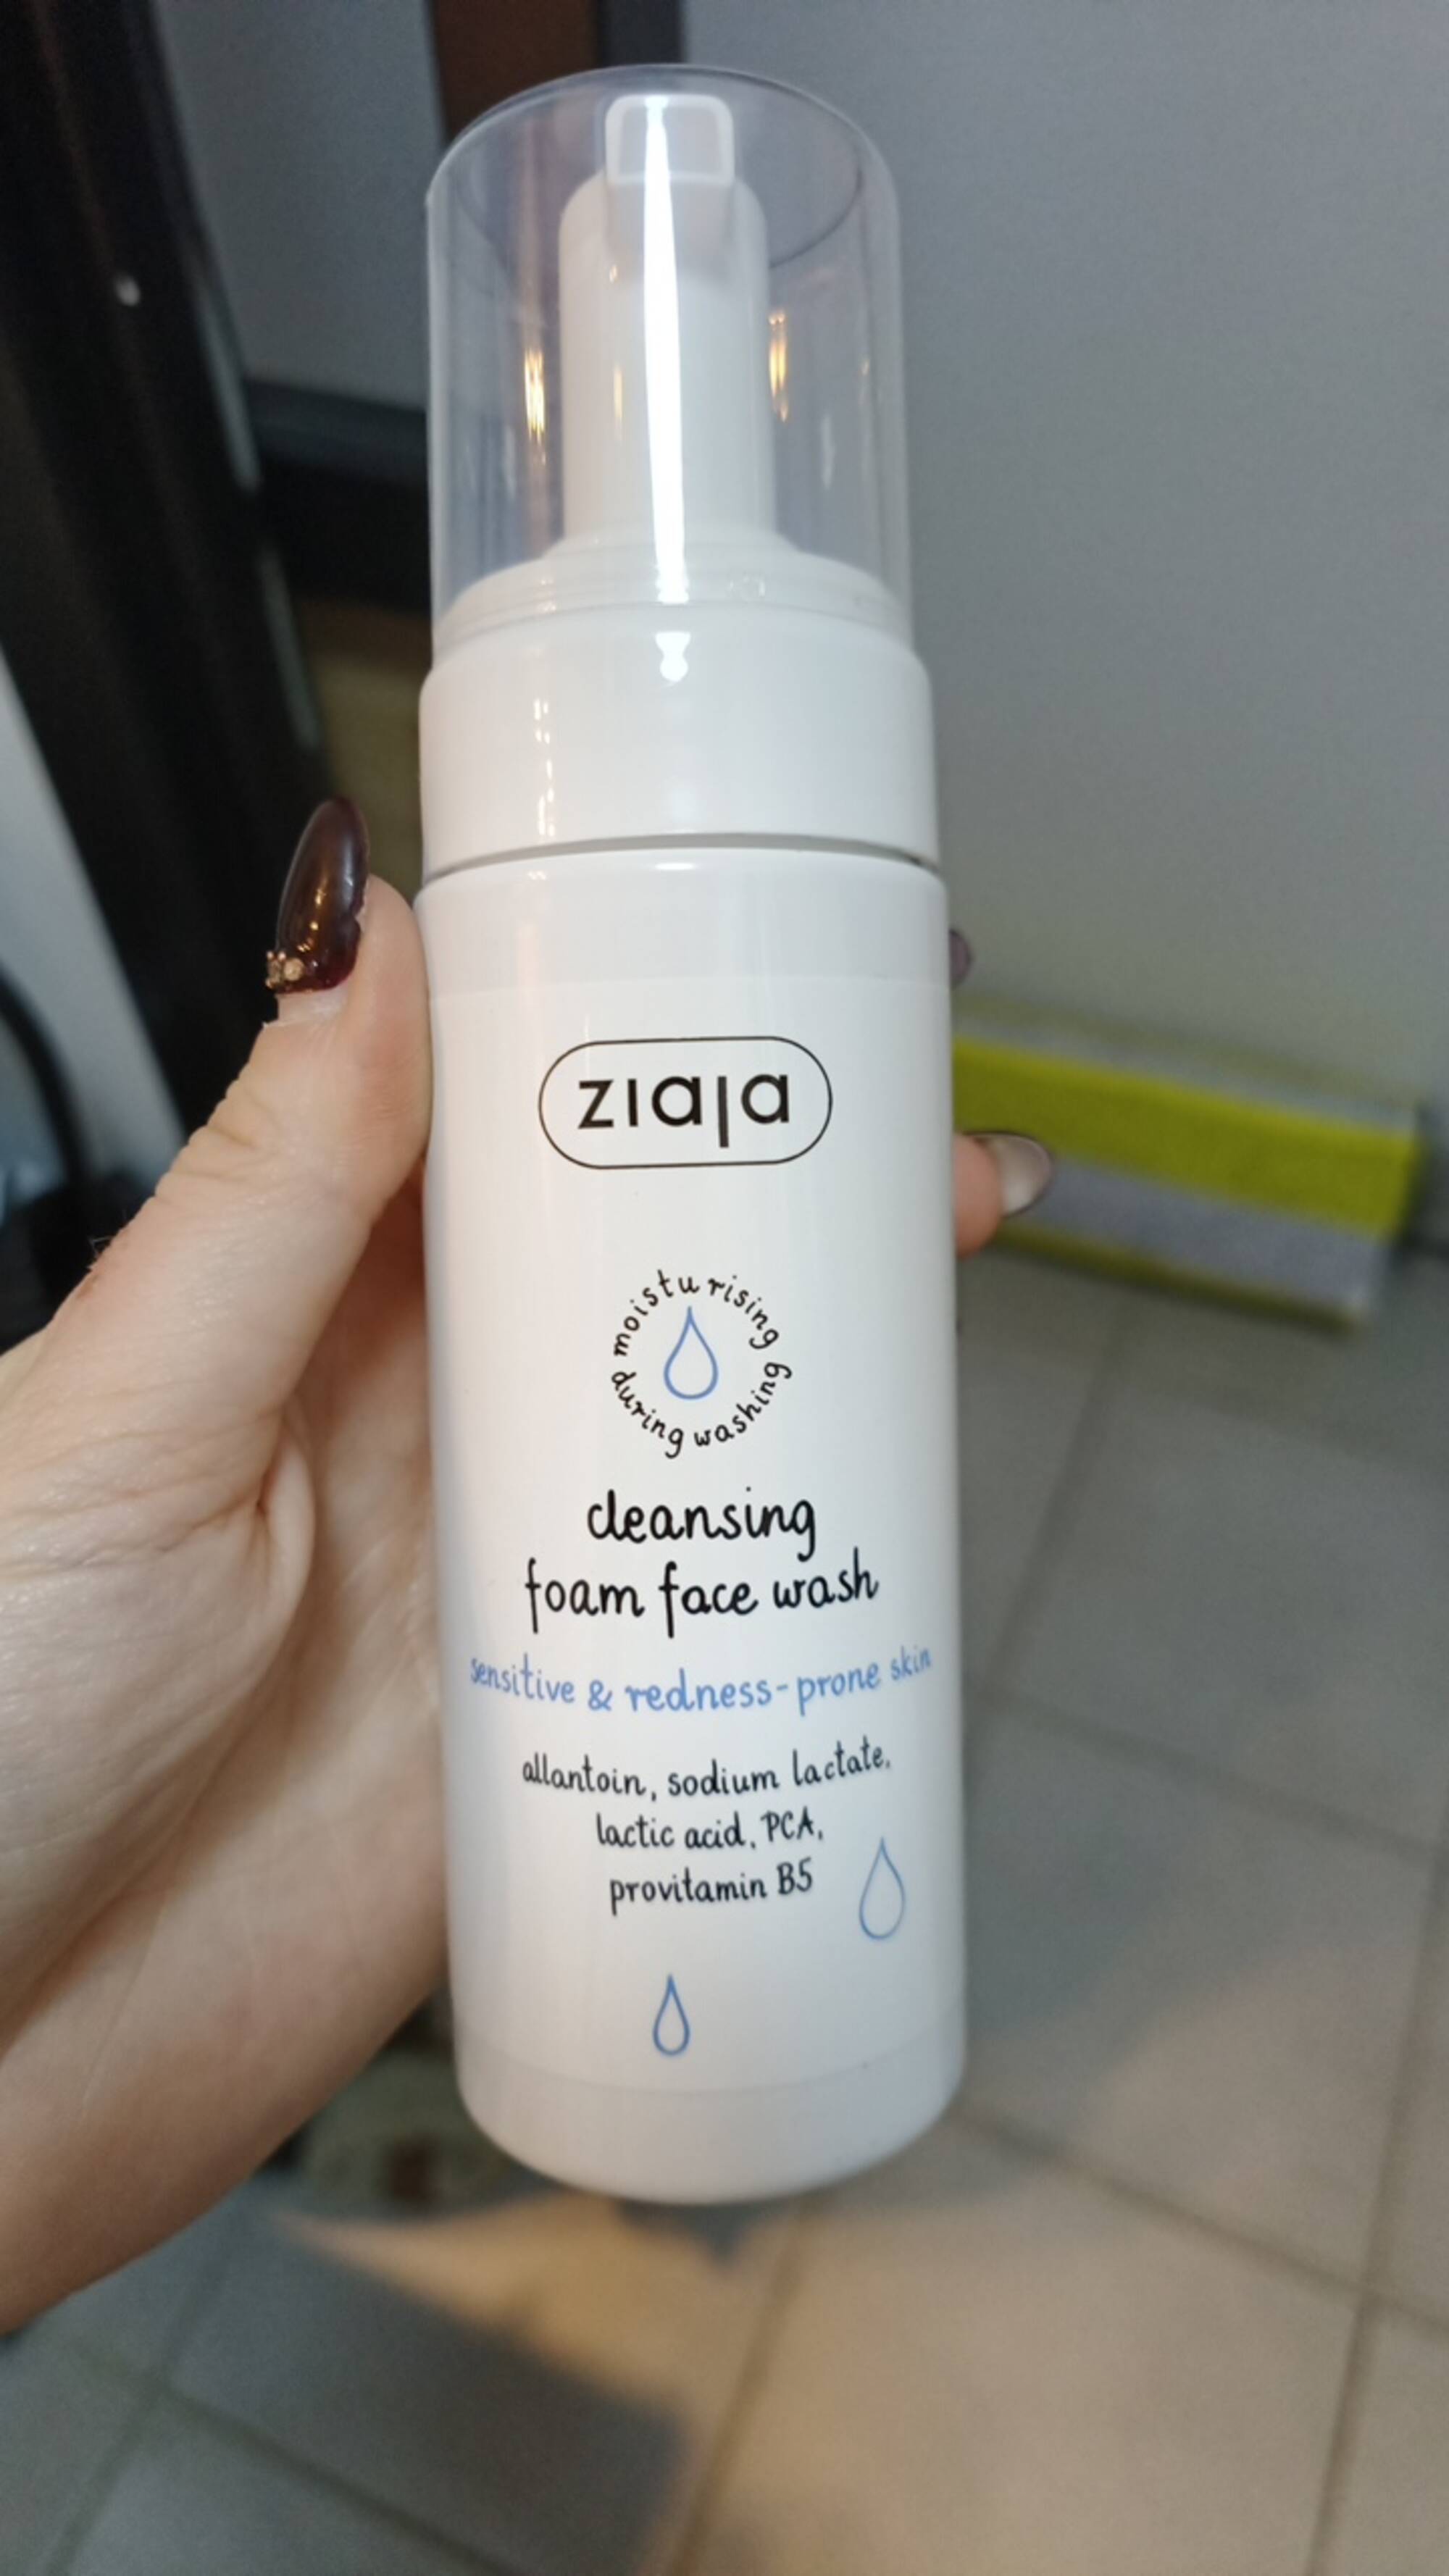 ZIAJA - Cleansing foam face wash